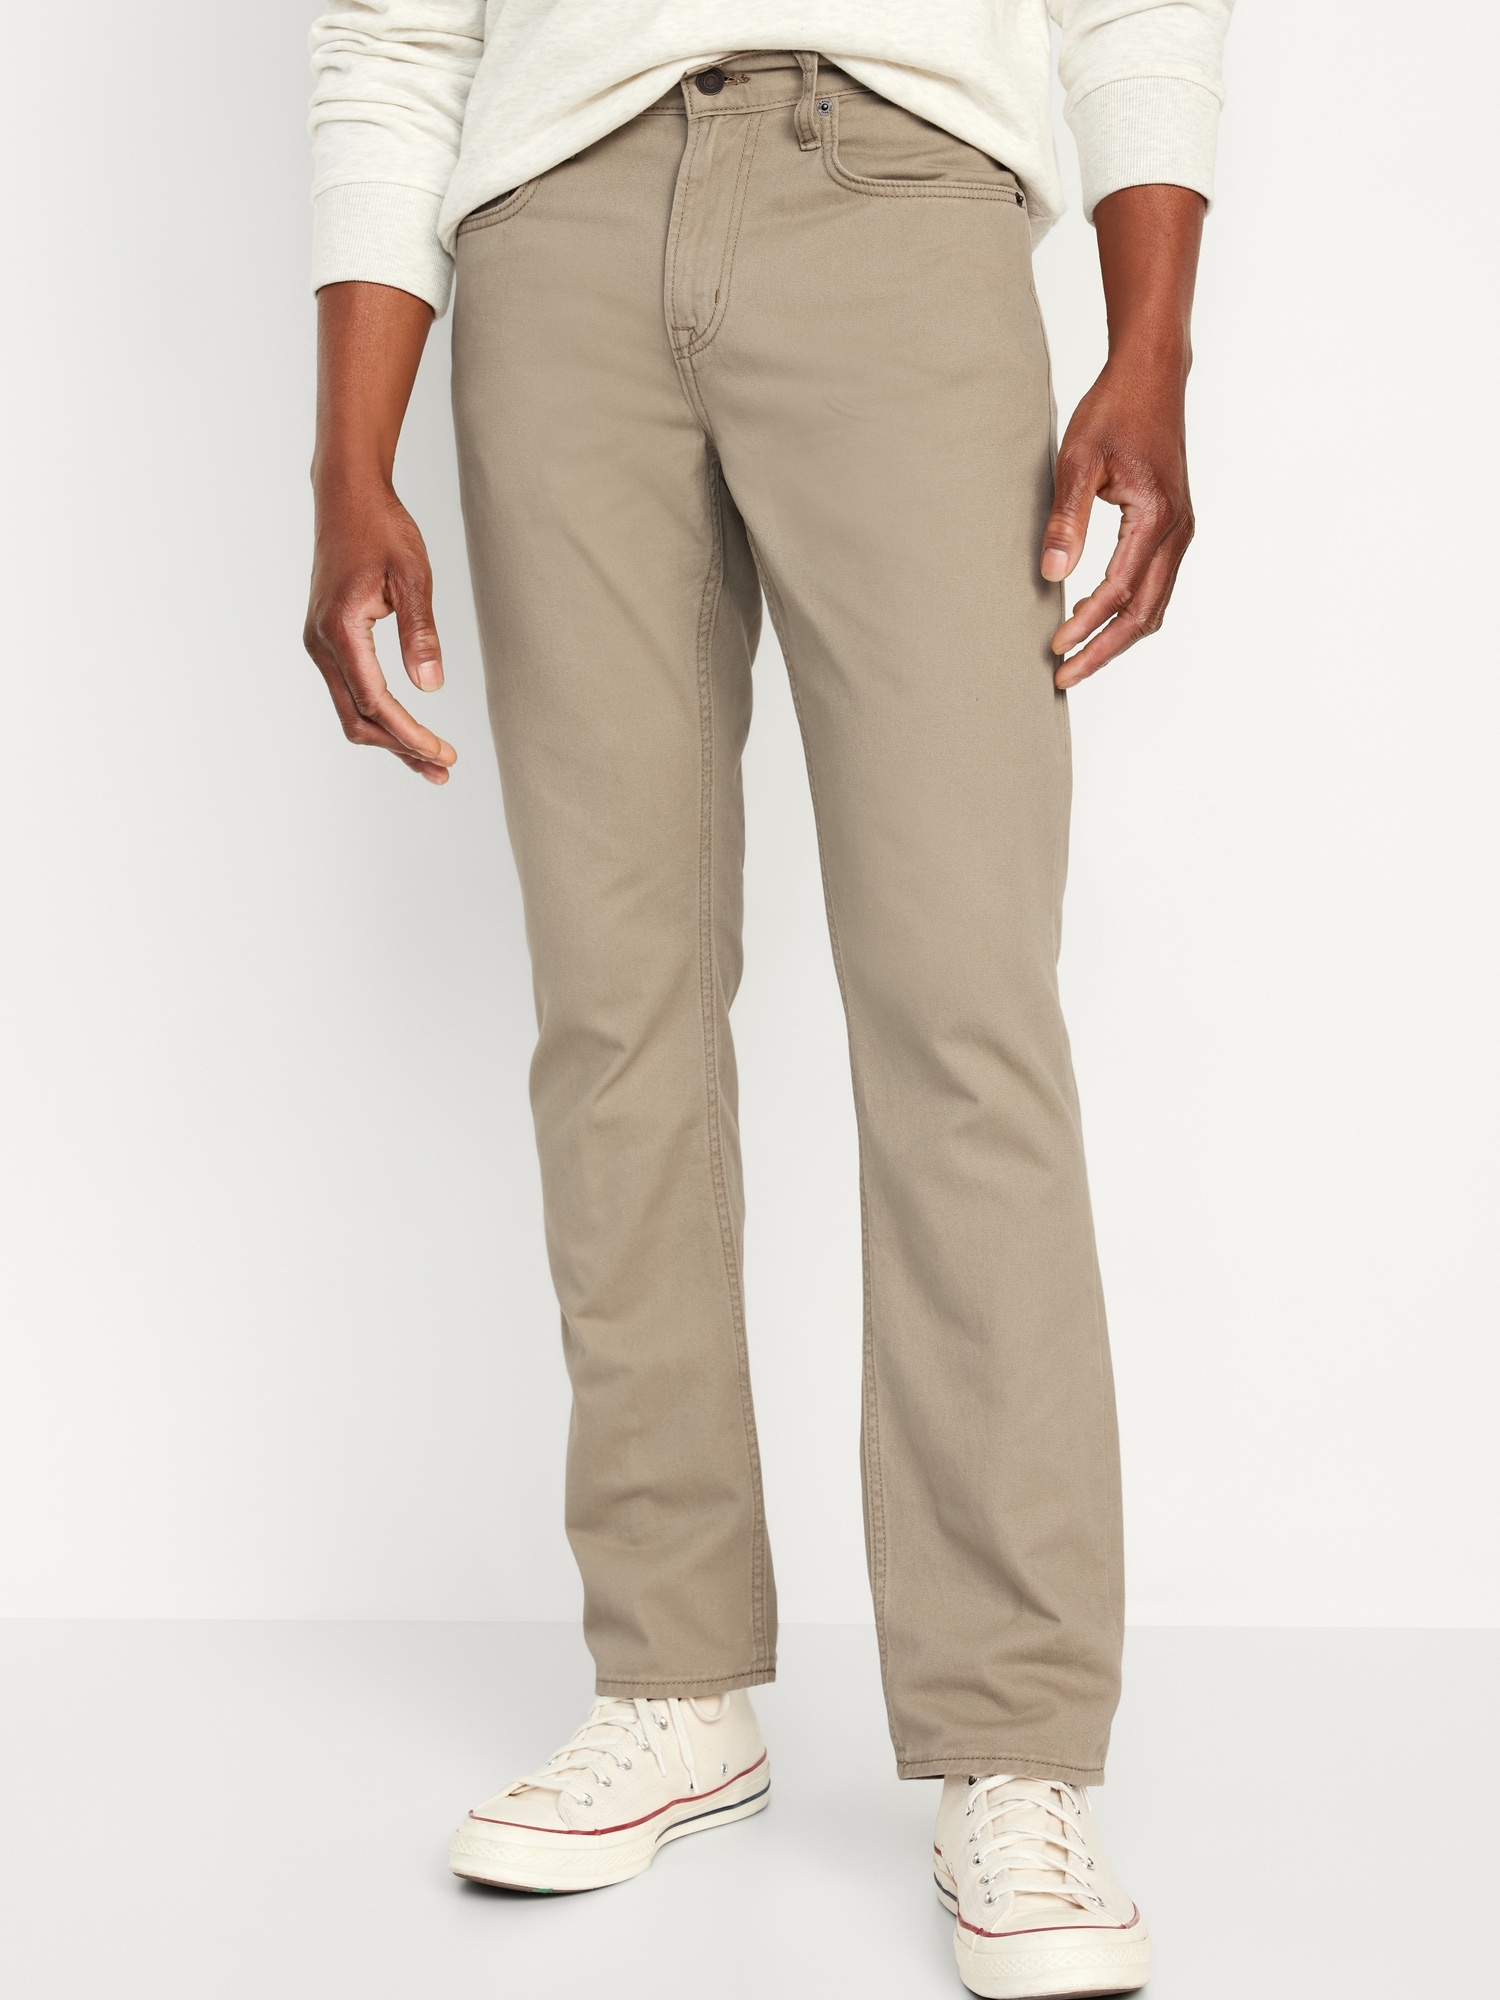 MANCREW Men's Solid Khaki Trousers